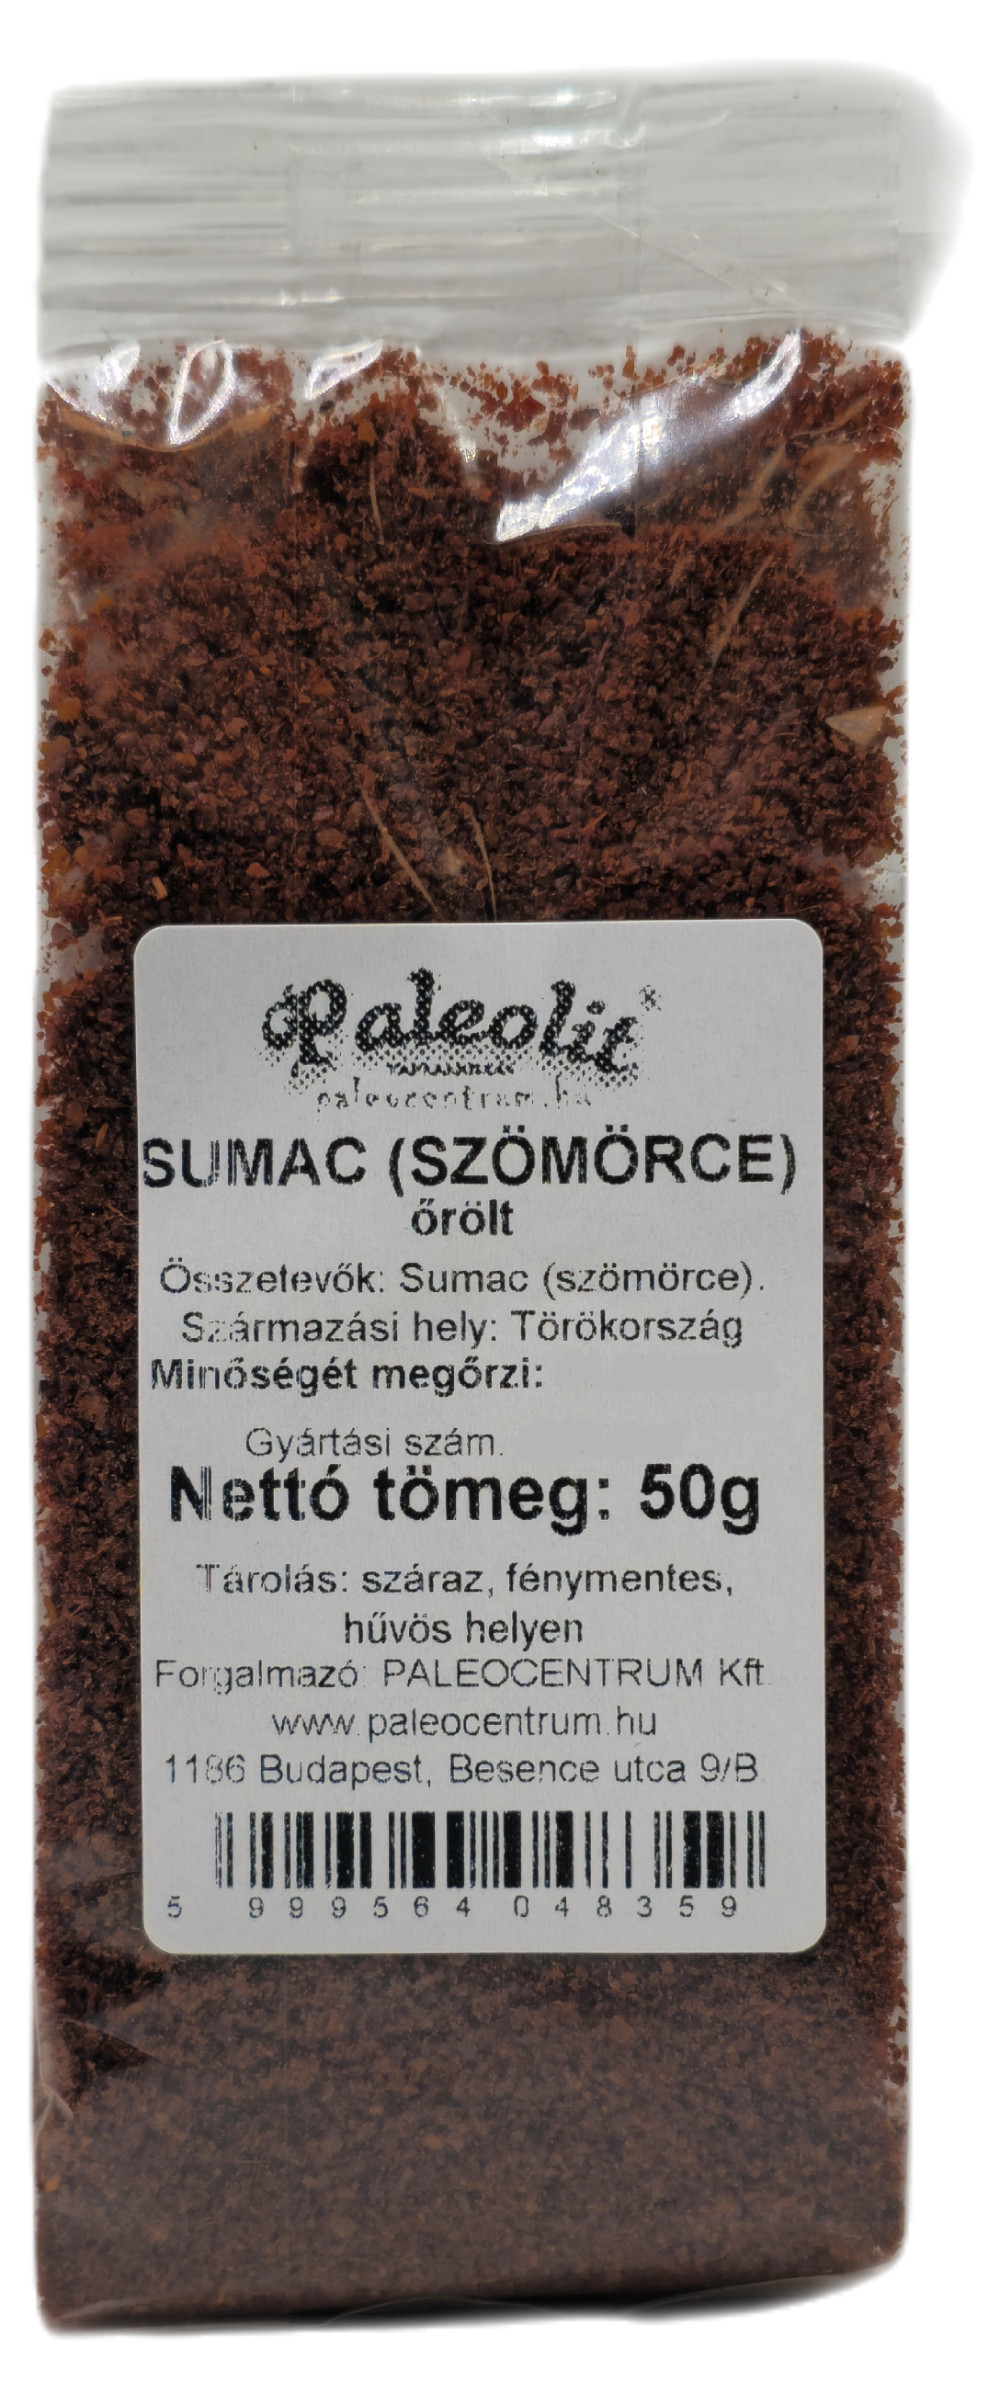 Paleolit Sumac (szömörce) 50g őrölt fűszer